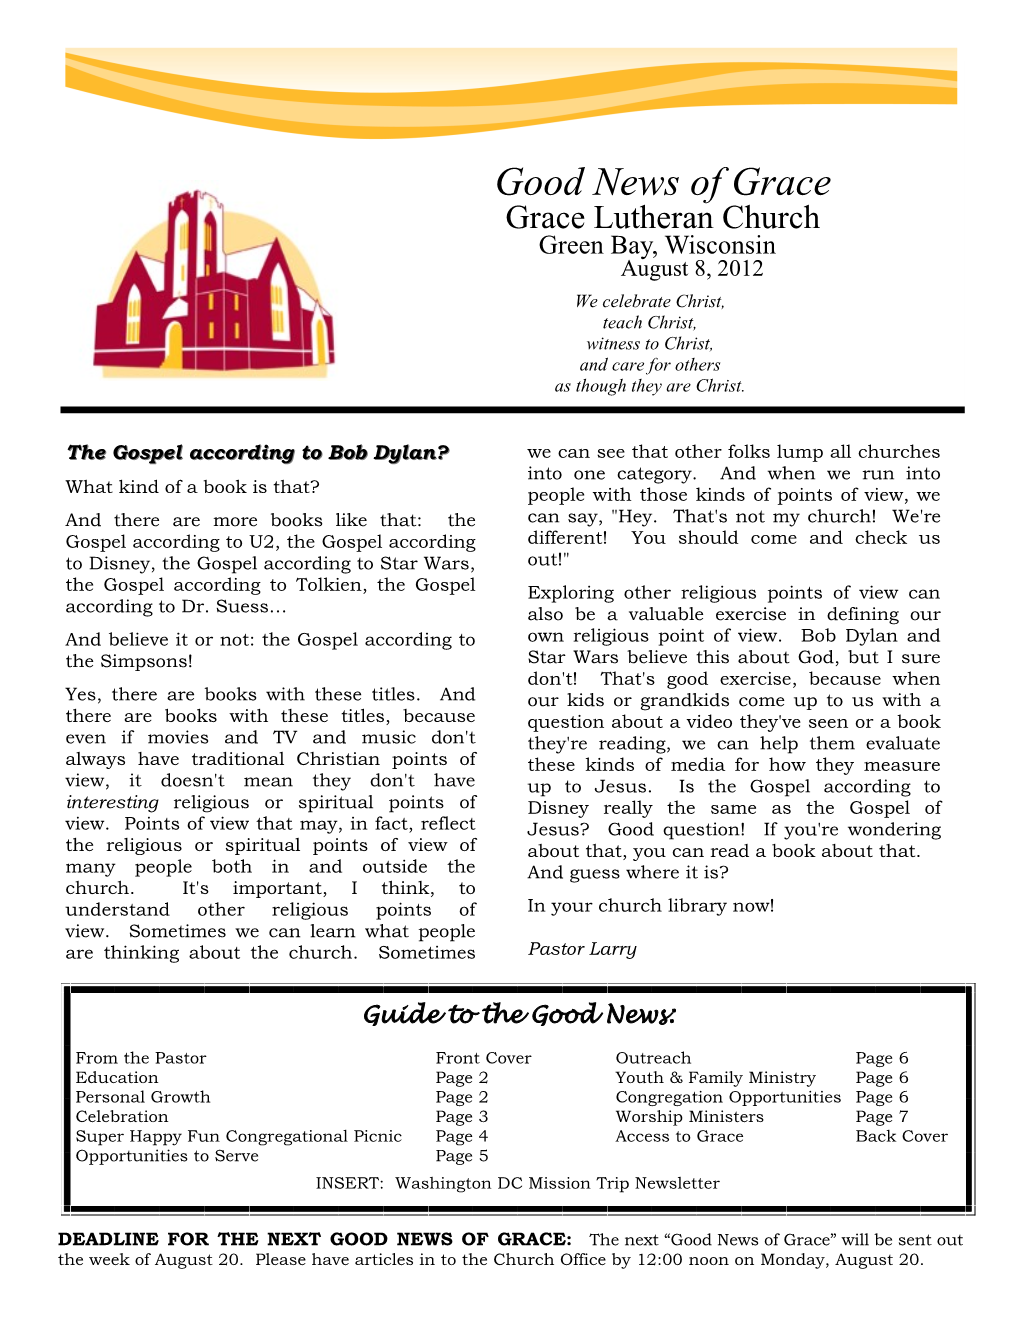 Good News of Grace Grace Lutheran Church Green Bay, Wisconsin August 8, 2012